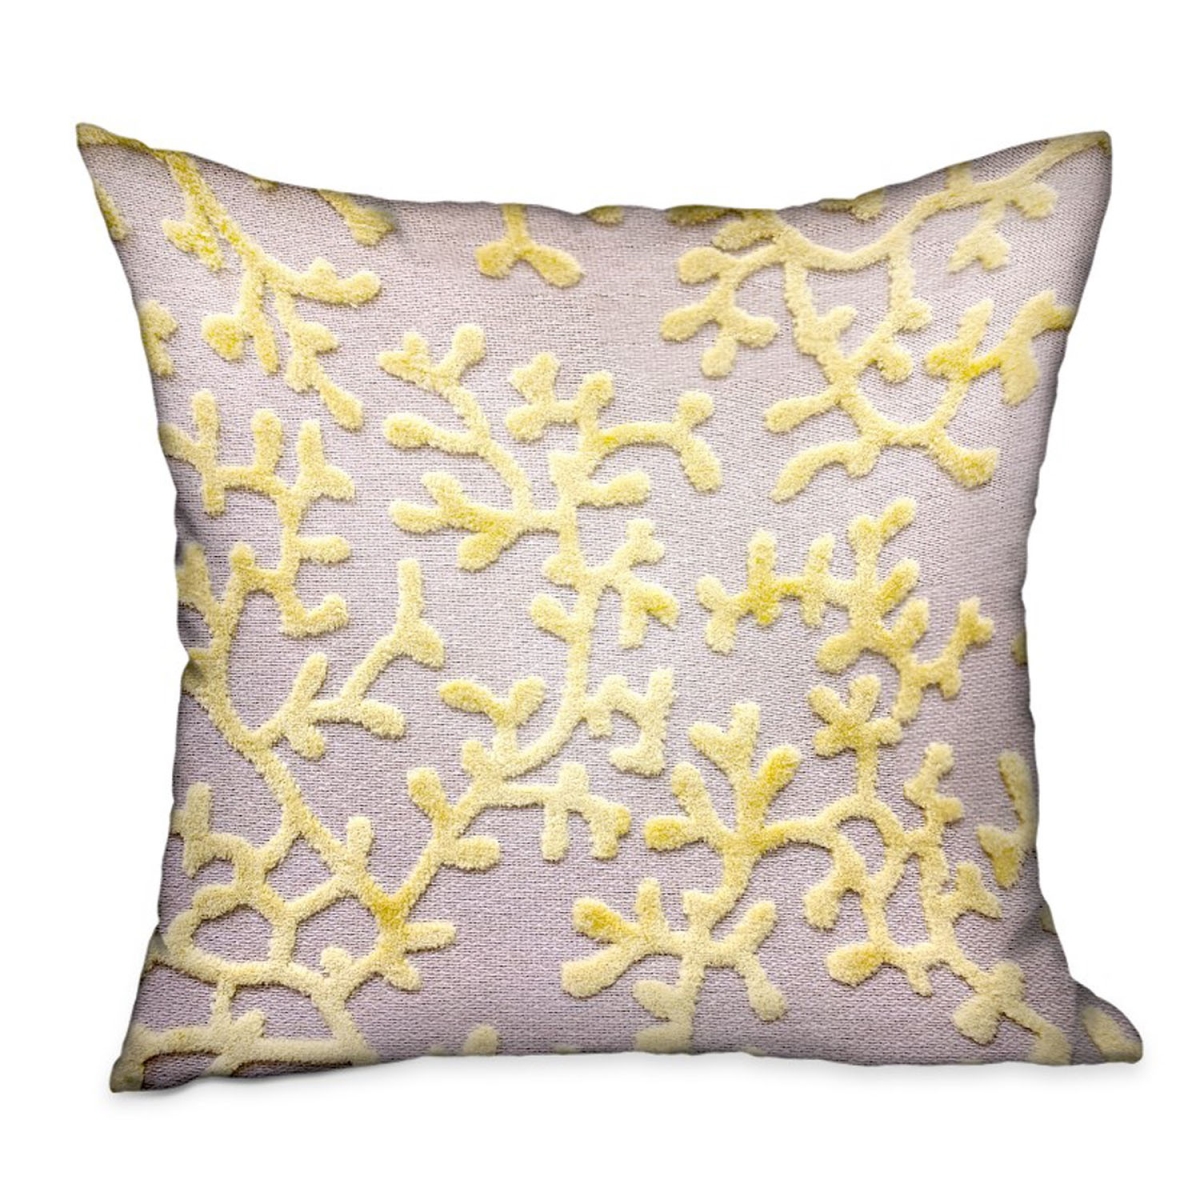 Pbdu1902-1220-dp 12 X 20 In. Lemon Reef Yellow & Cream Floral Luxury Throw Pillow